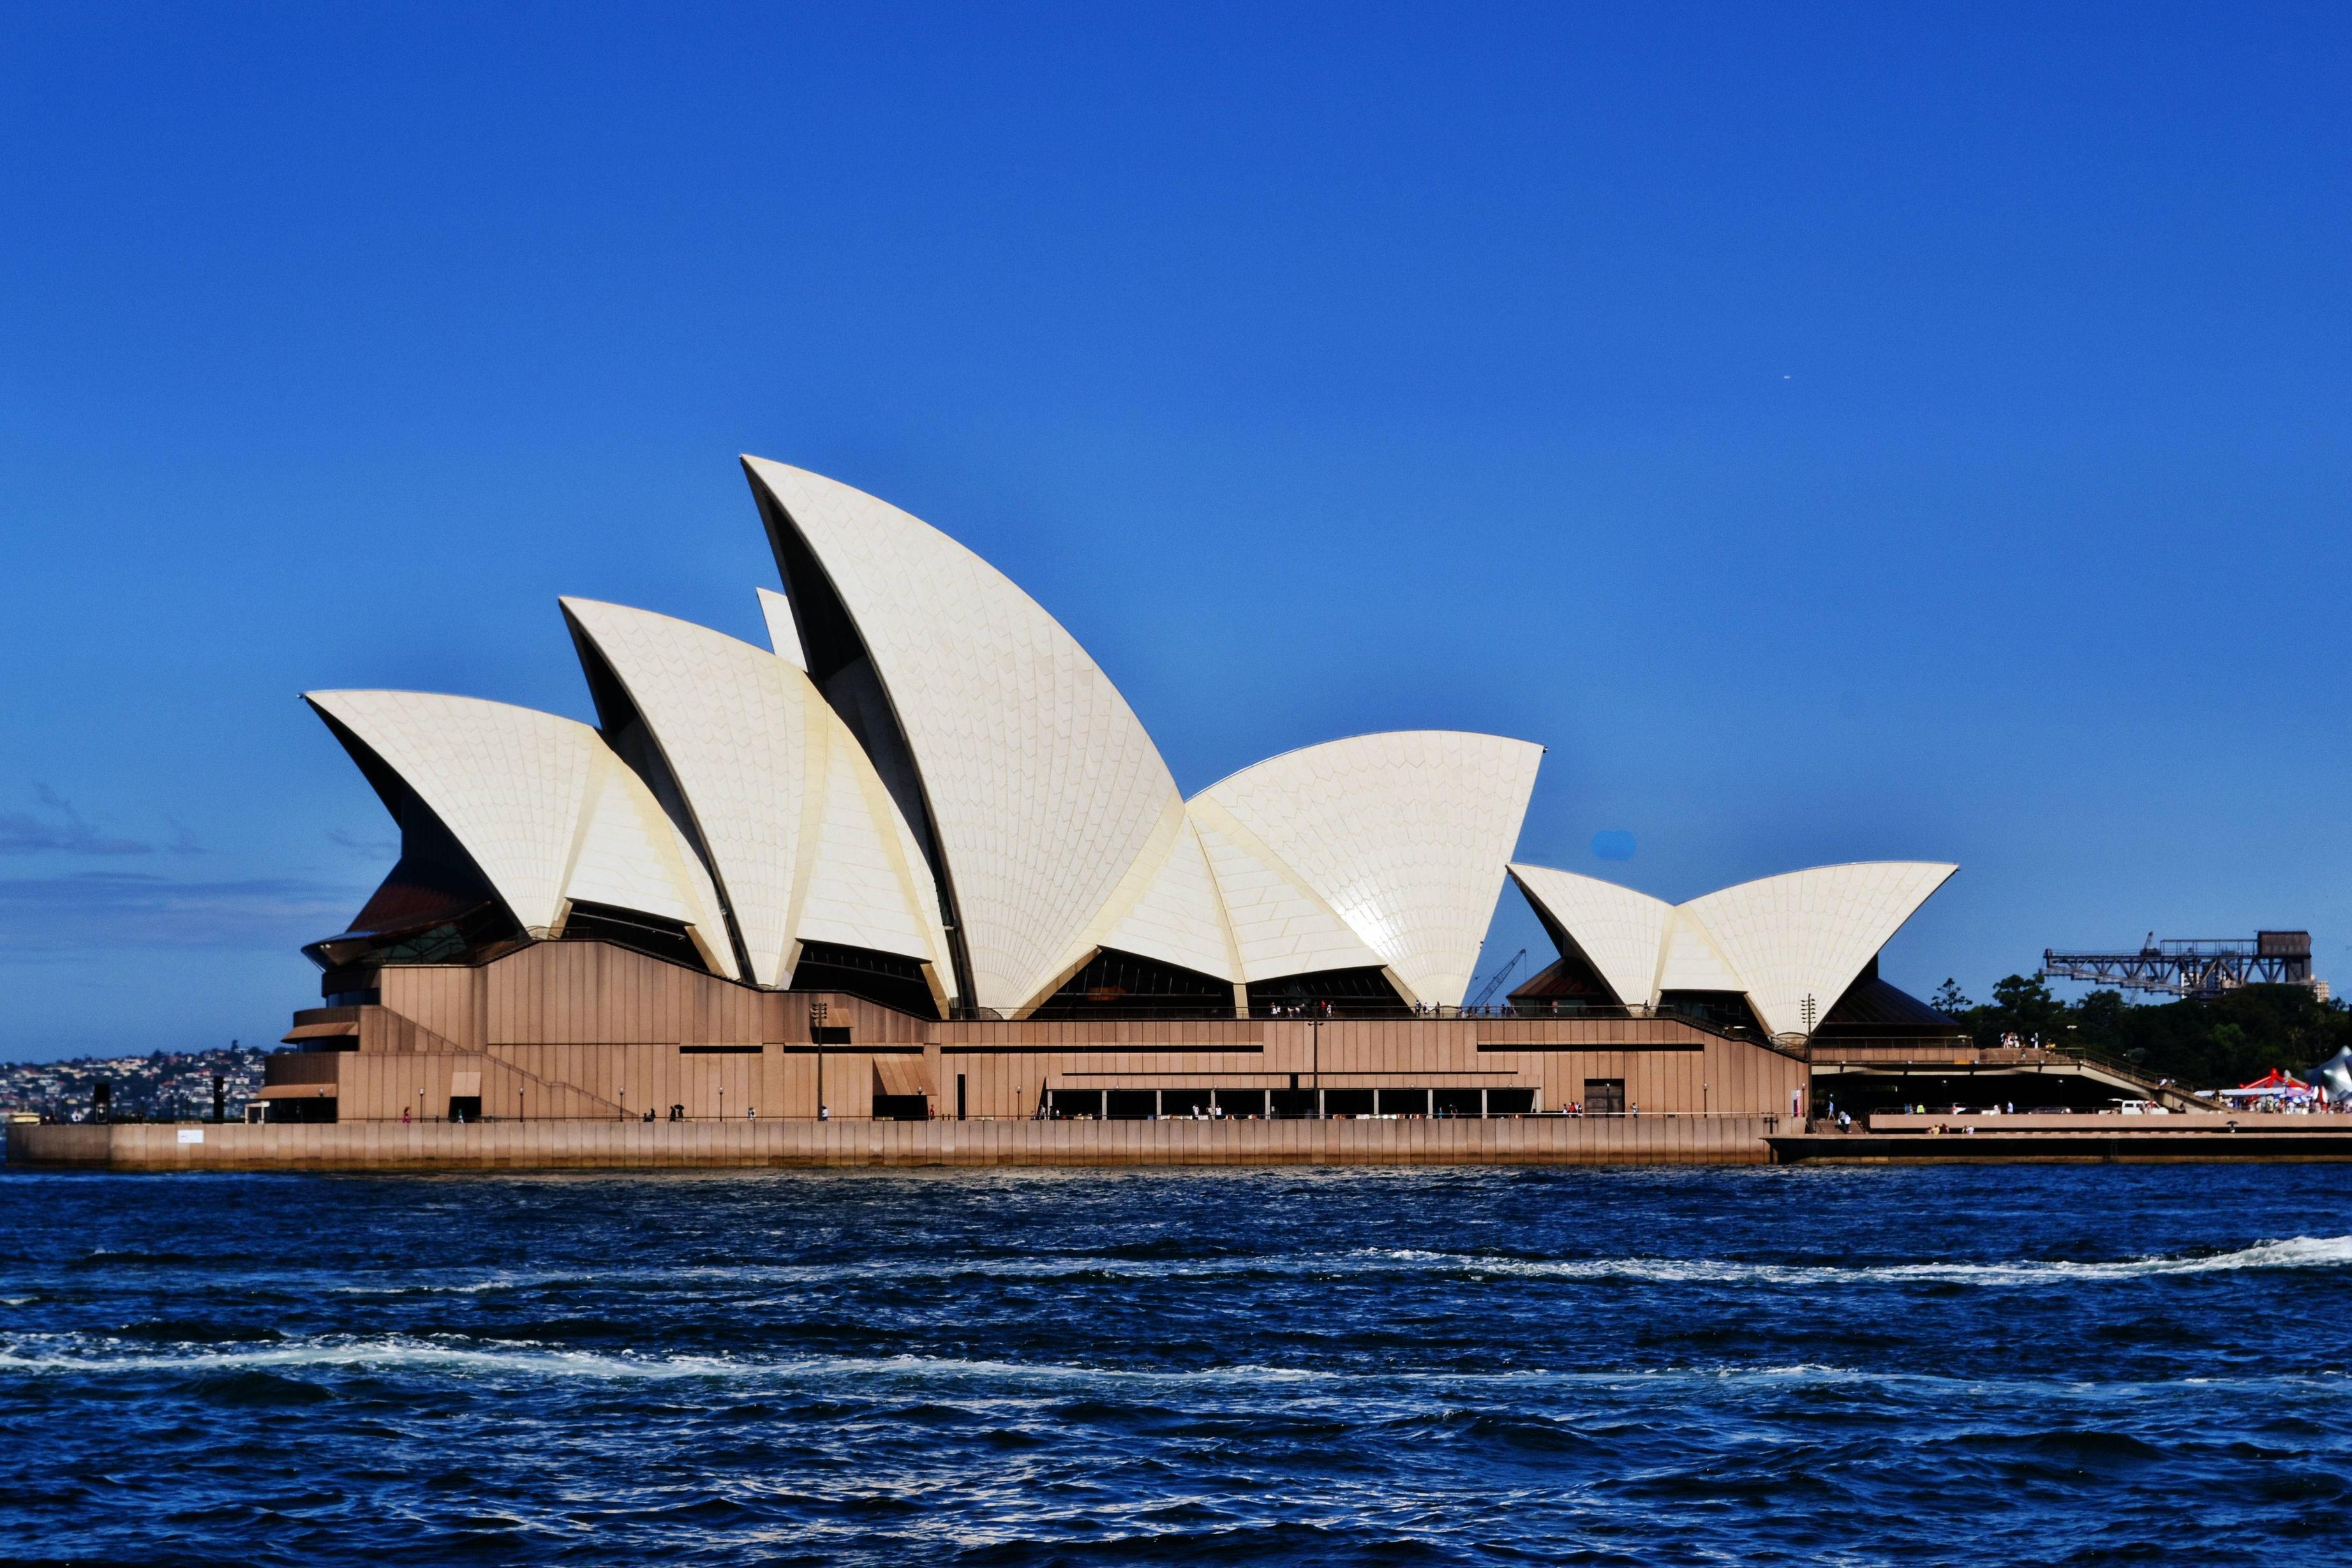 Sydney Opera House 54 Image. hdwallpaper